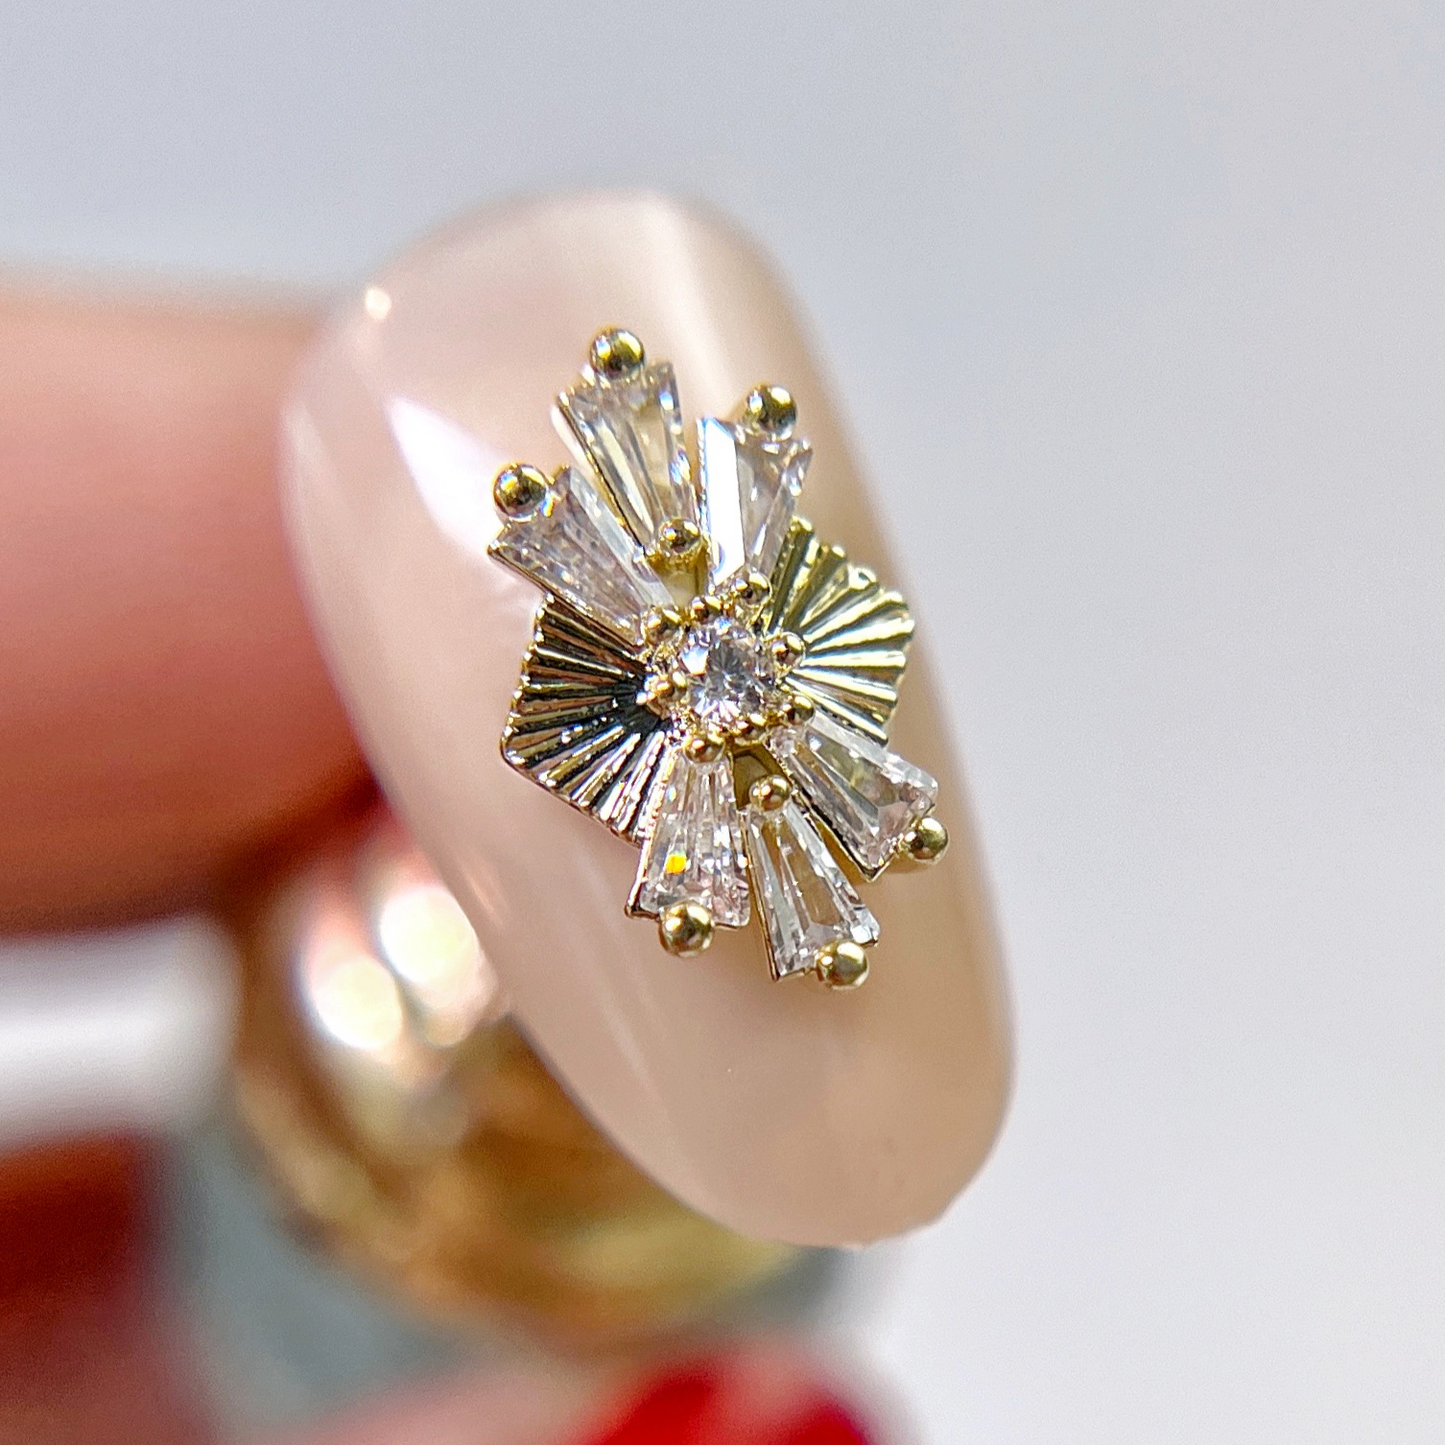 Nail tip with gold rhinestone charm. 